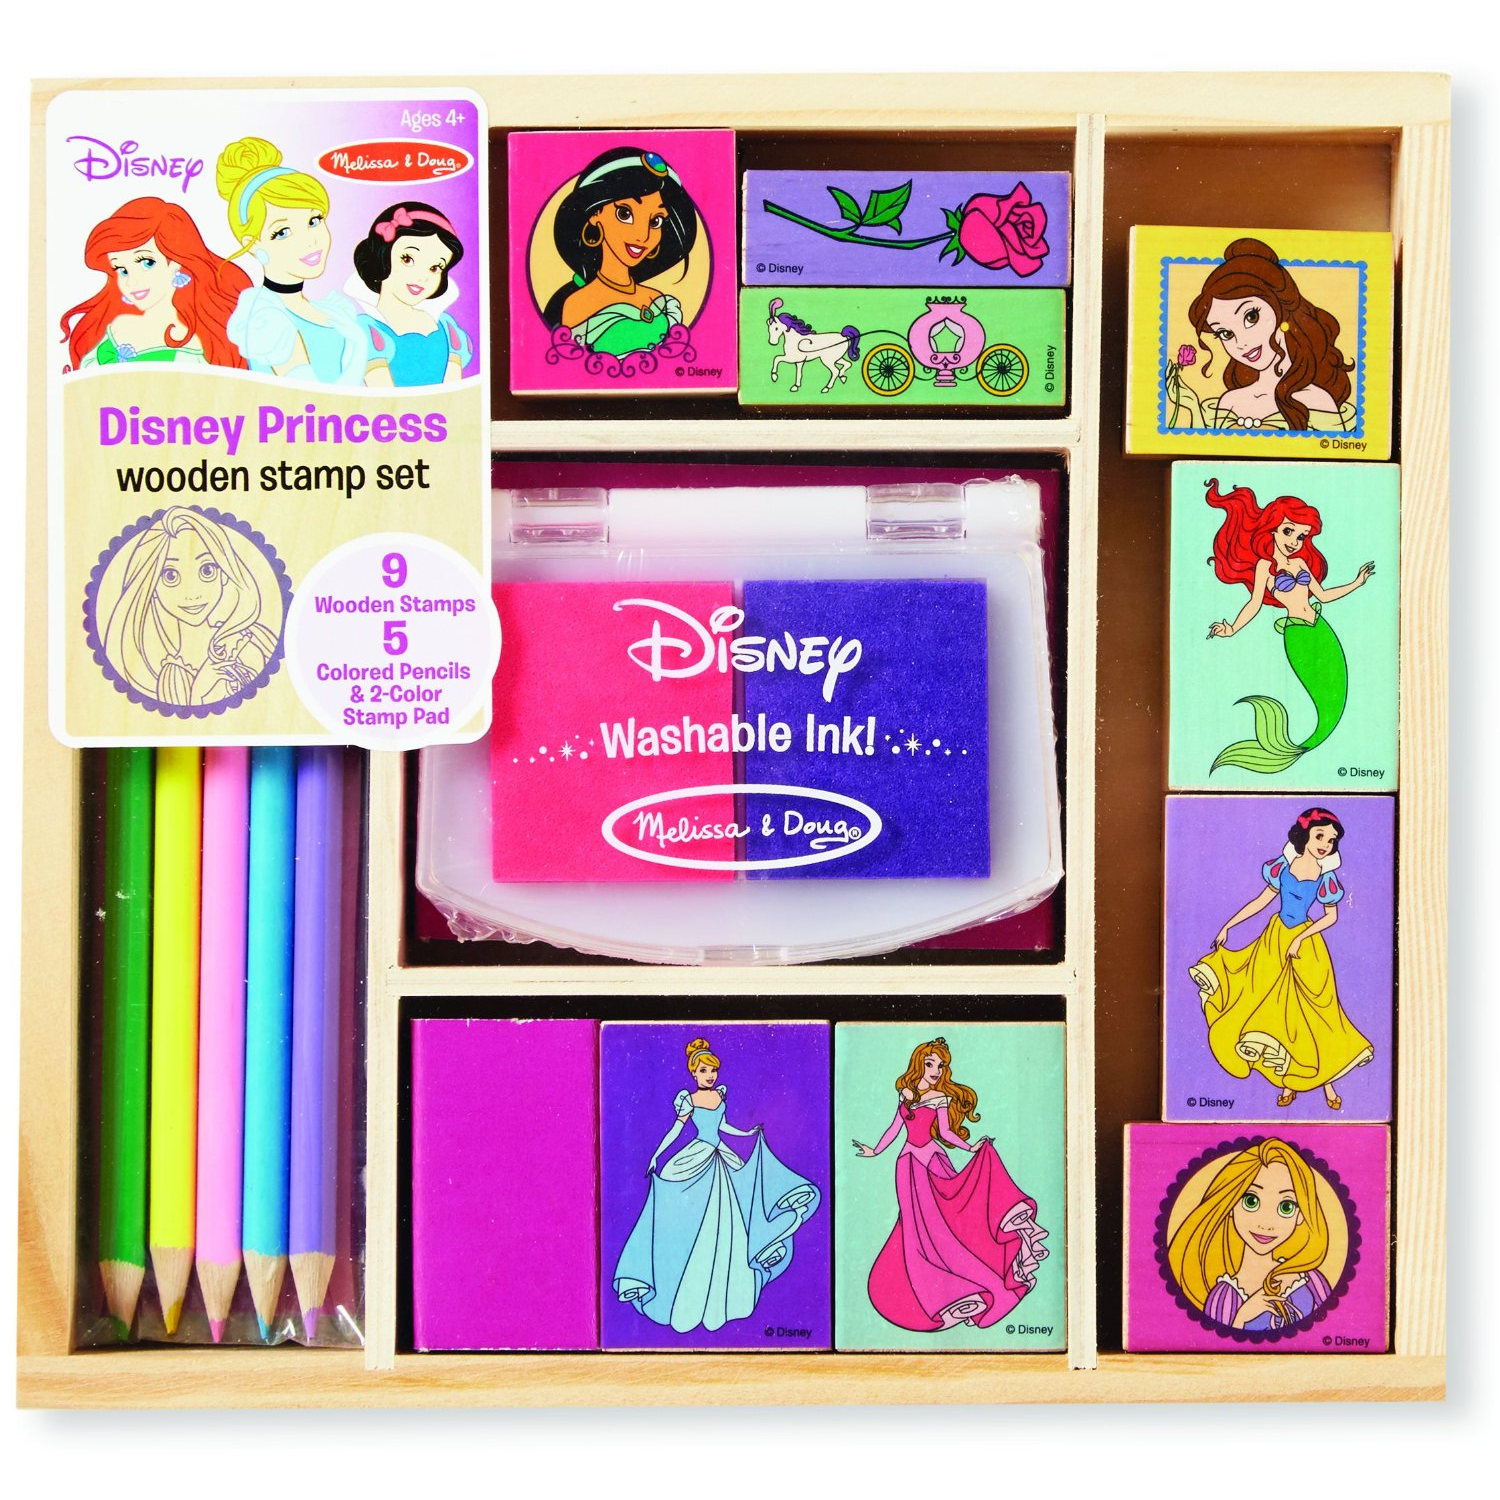 Melissa & Doug Disney Princess Wooden Stamp Set Only $8.99 on Amazon!